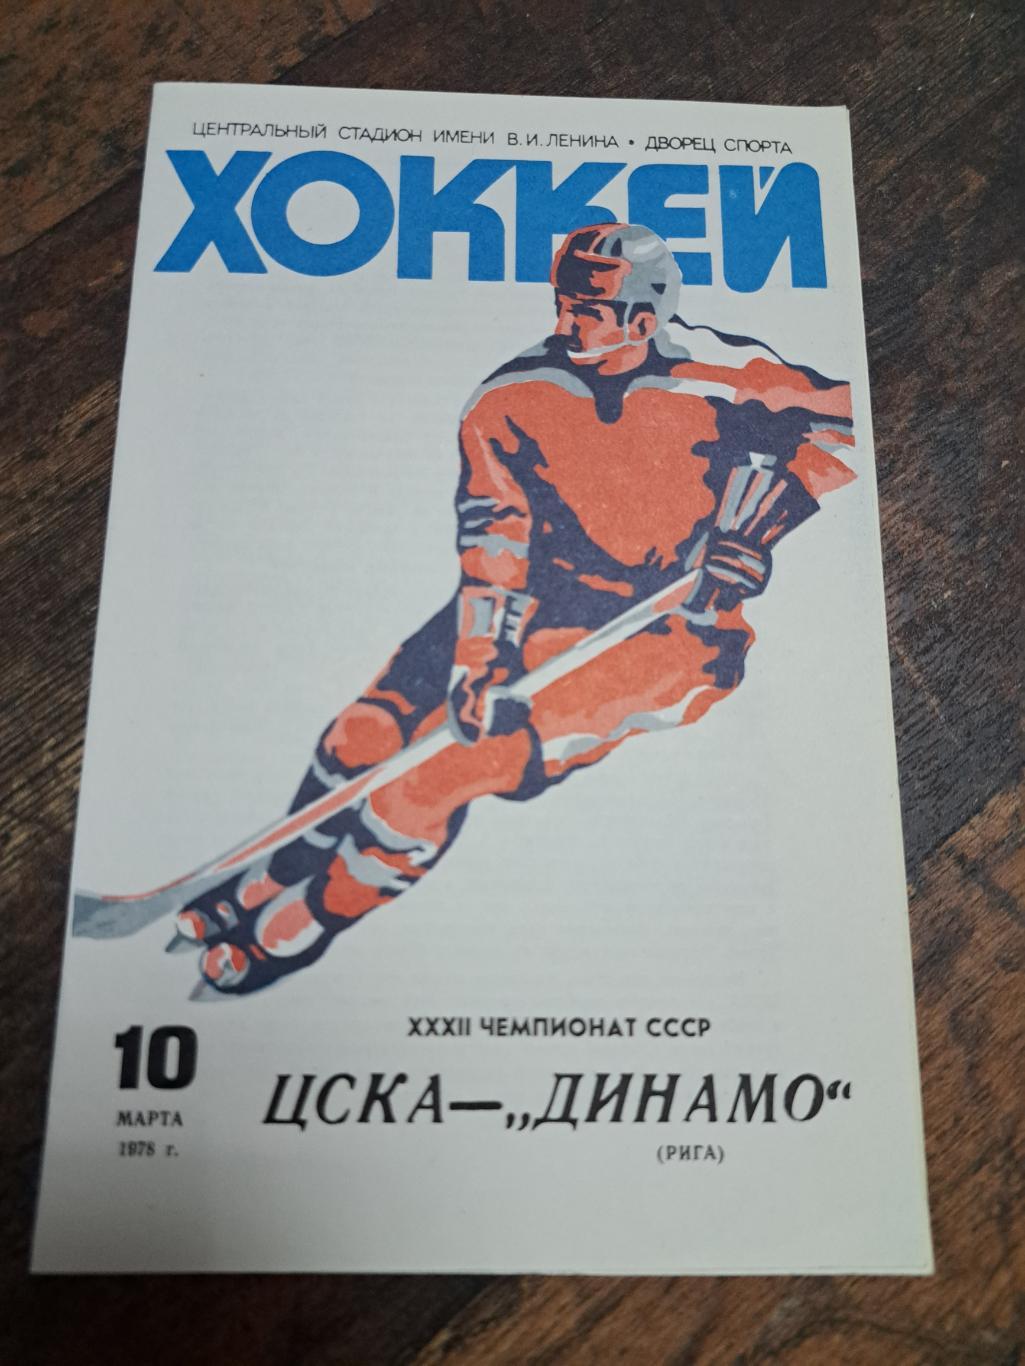 ЦСКА Москва - Динамо Рига 10.03.1978 отличное состояние!